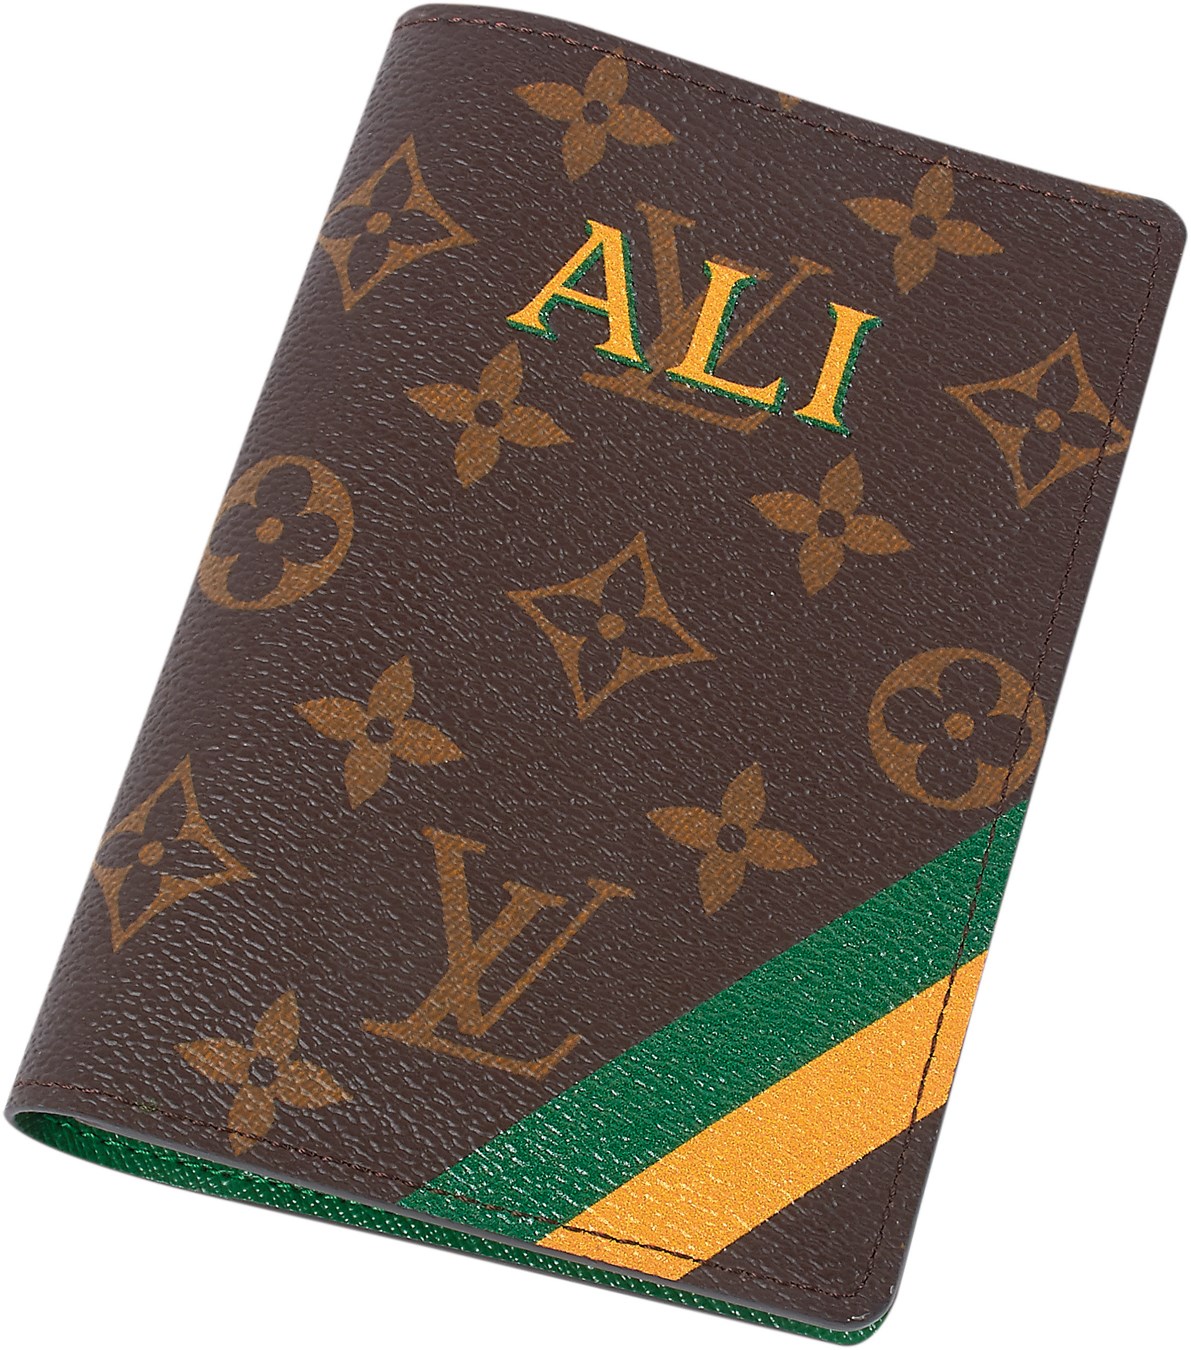 Muhammad Ali Personally Monogrammed Louis Vuitton Wallet